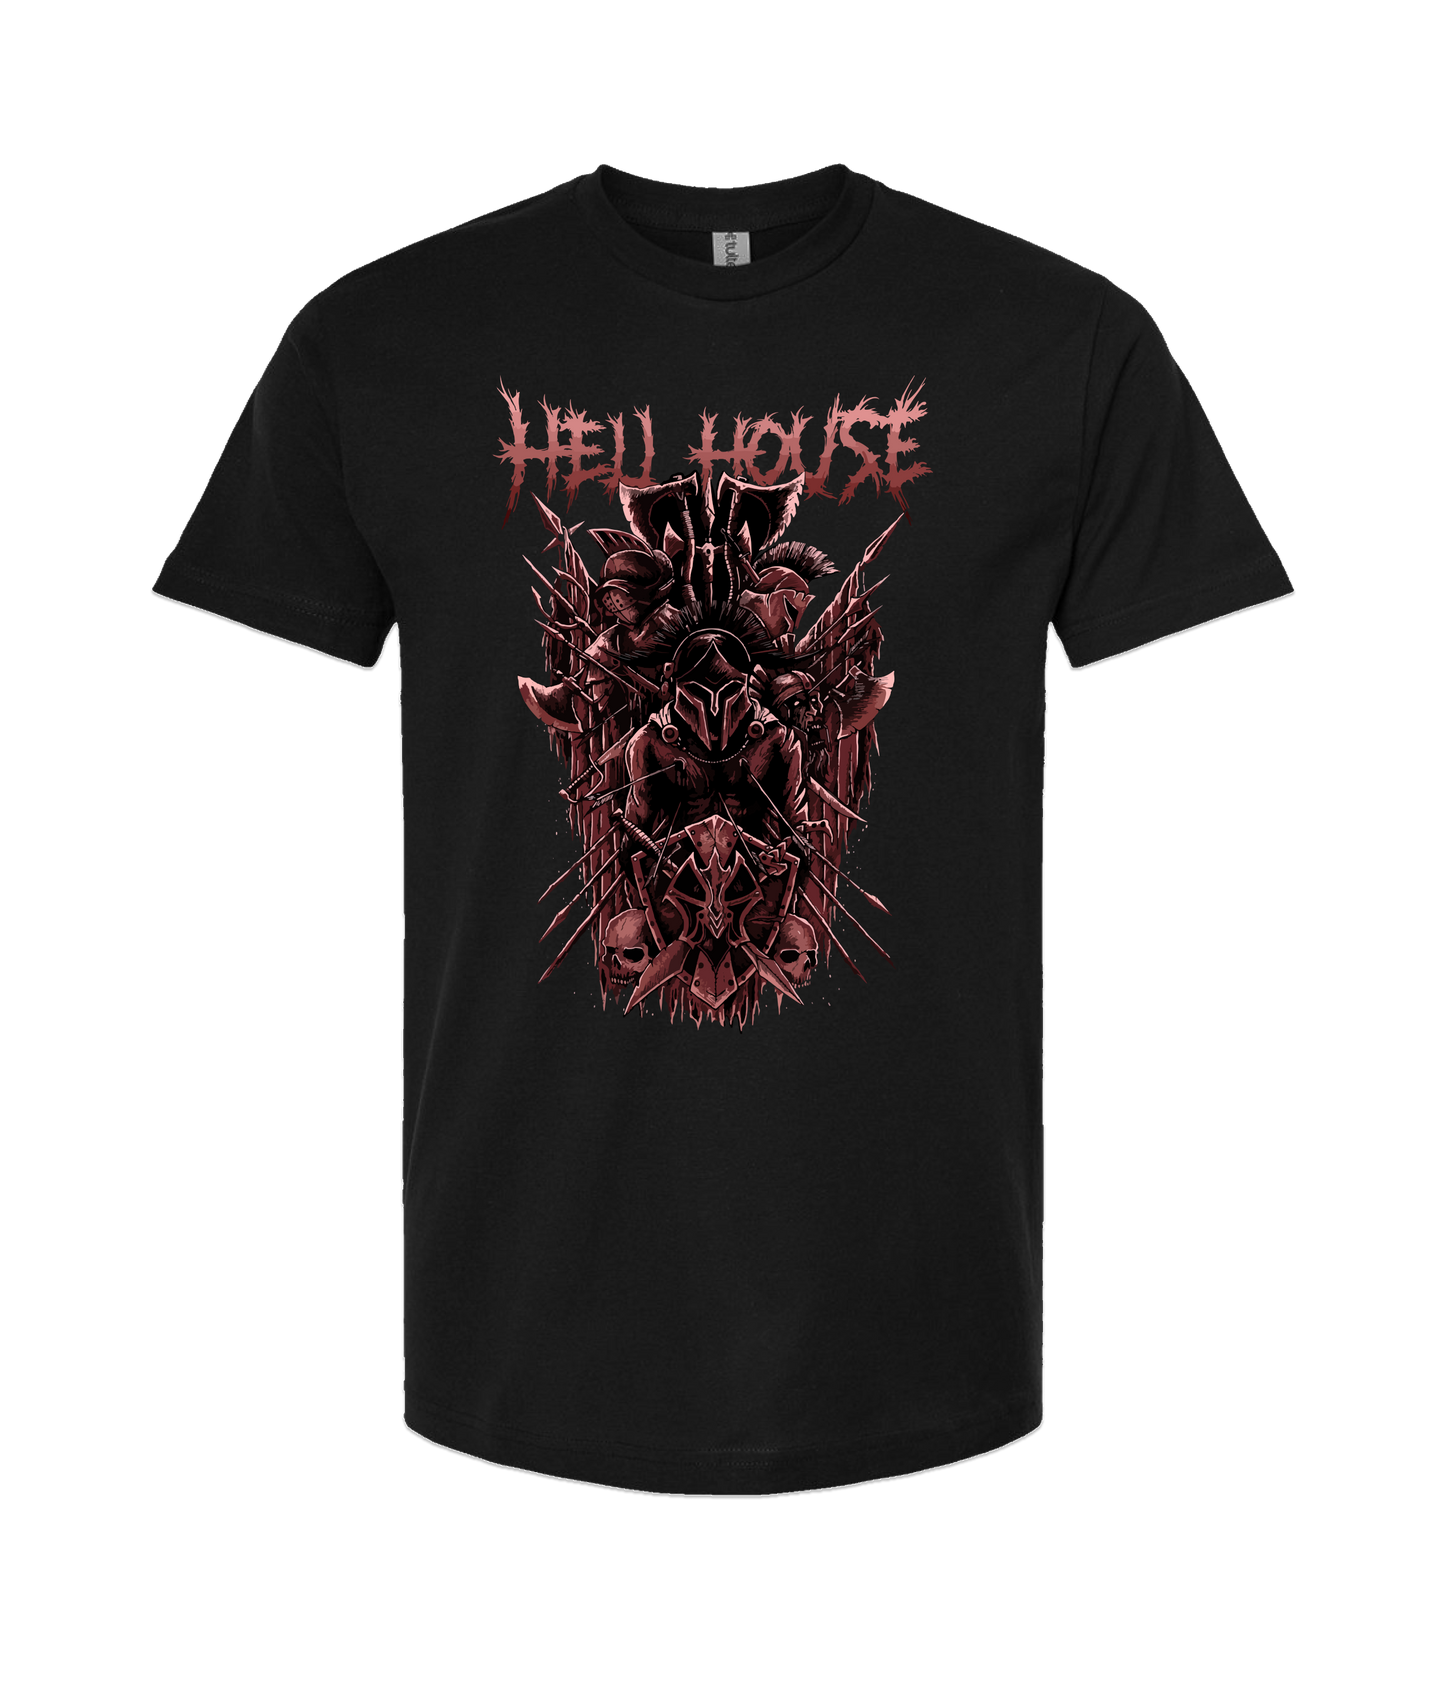 Hellhouse crypt - GLADIATOR - Black T-Shirt